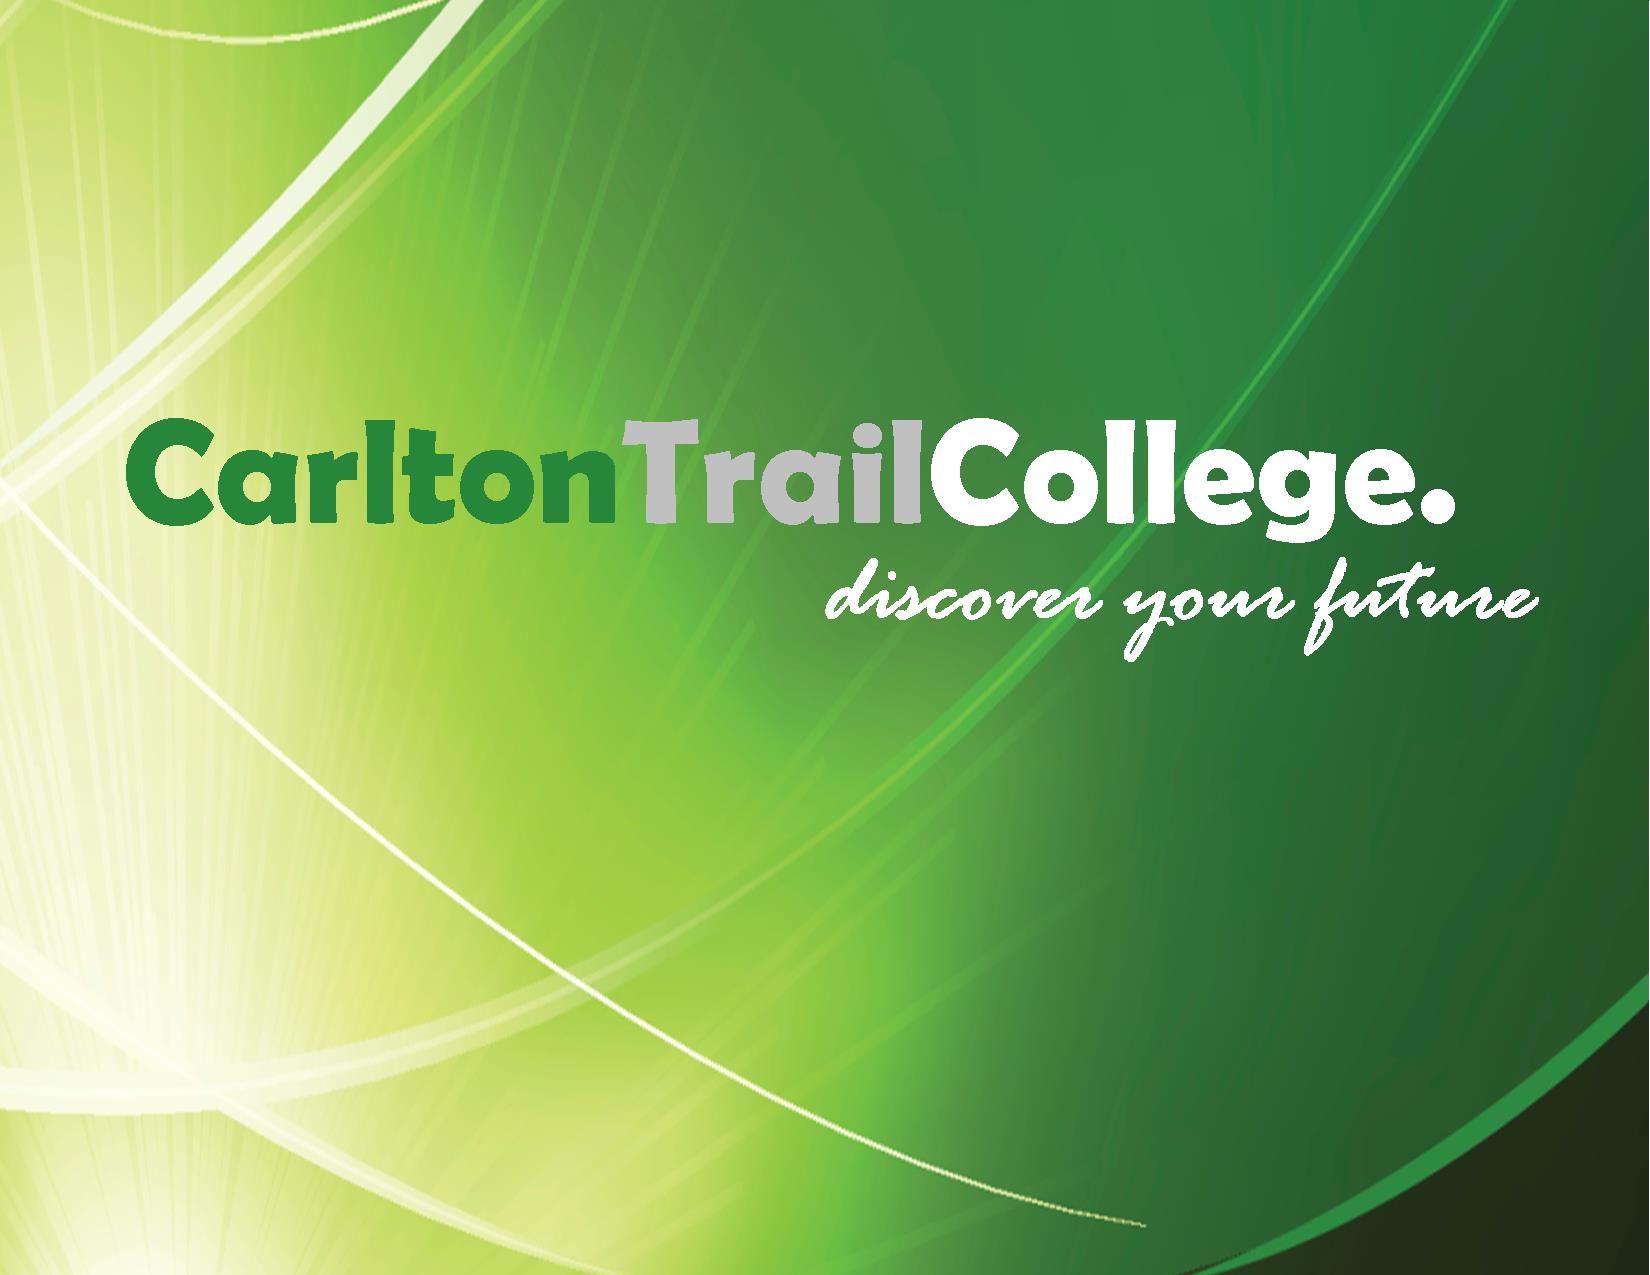 Carlton Trail College Logo on light and dark green background.